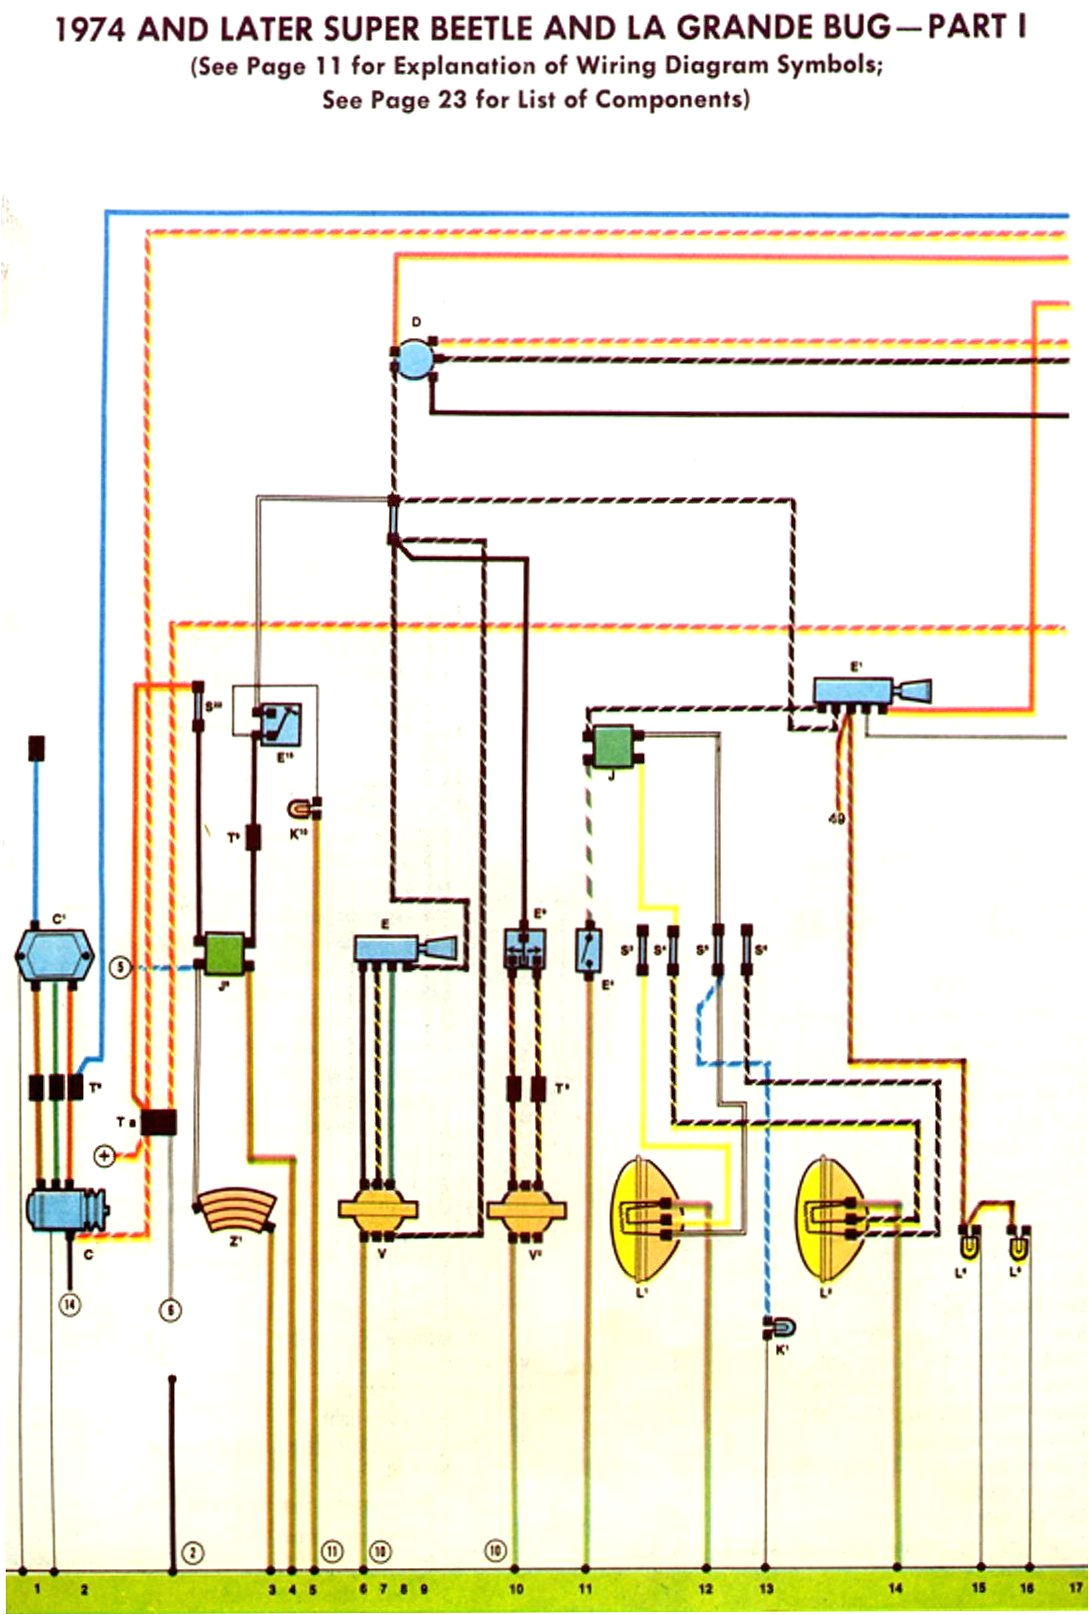 1974 75 super beetle wiring diagram thegoldenbug com 74 beetle fuse box wiring diagram